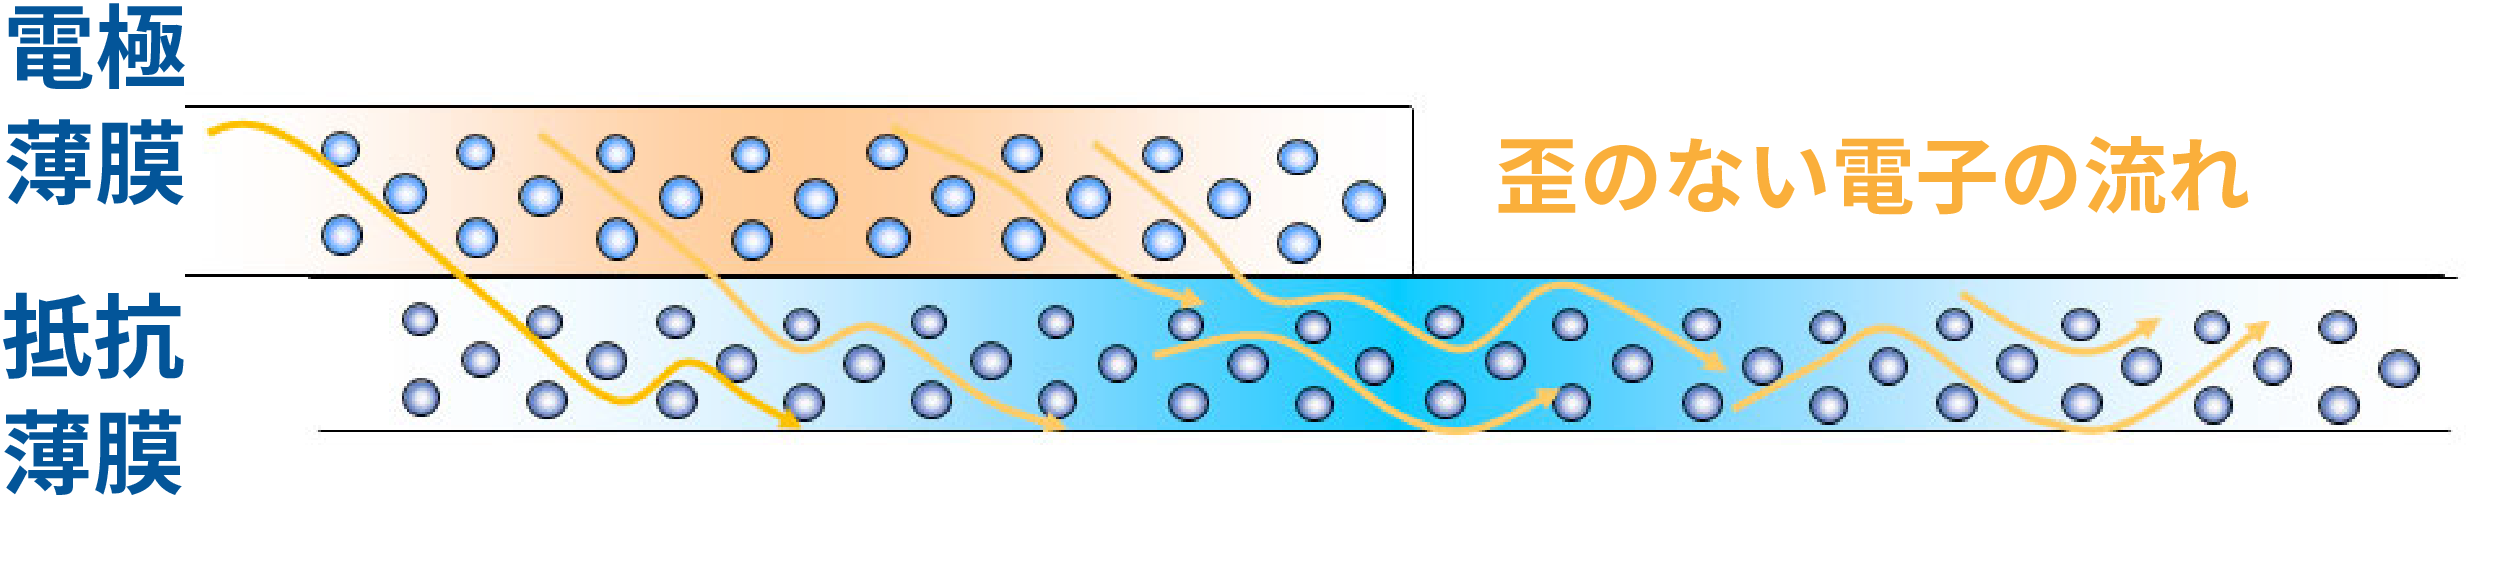 Electron flow diagram